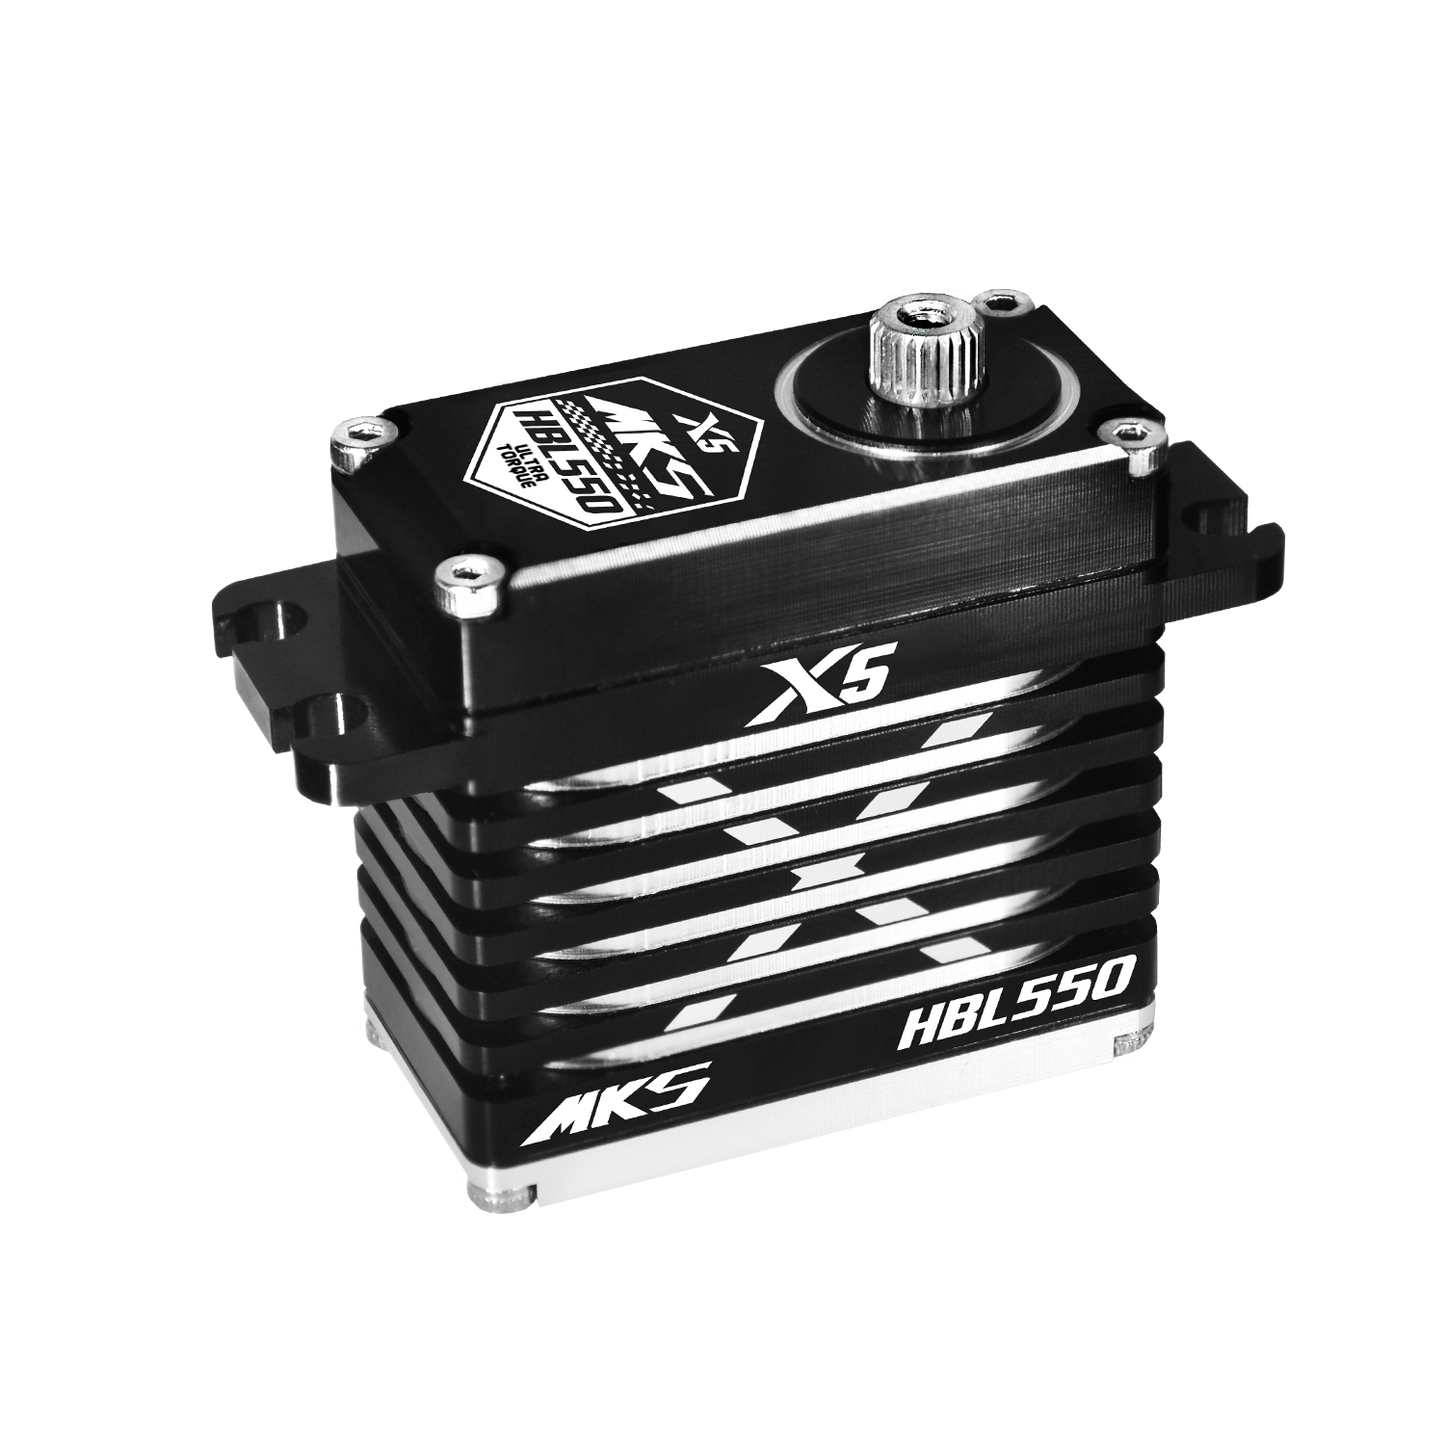 X5 HBL550 MKS Brushless Metal Gear High Torque Digital Servo (High Voltage)